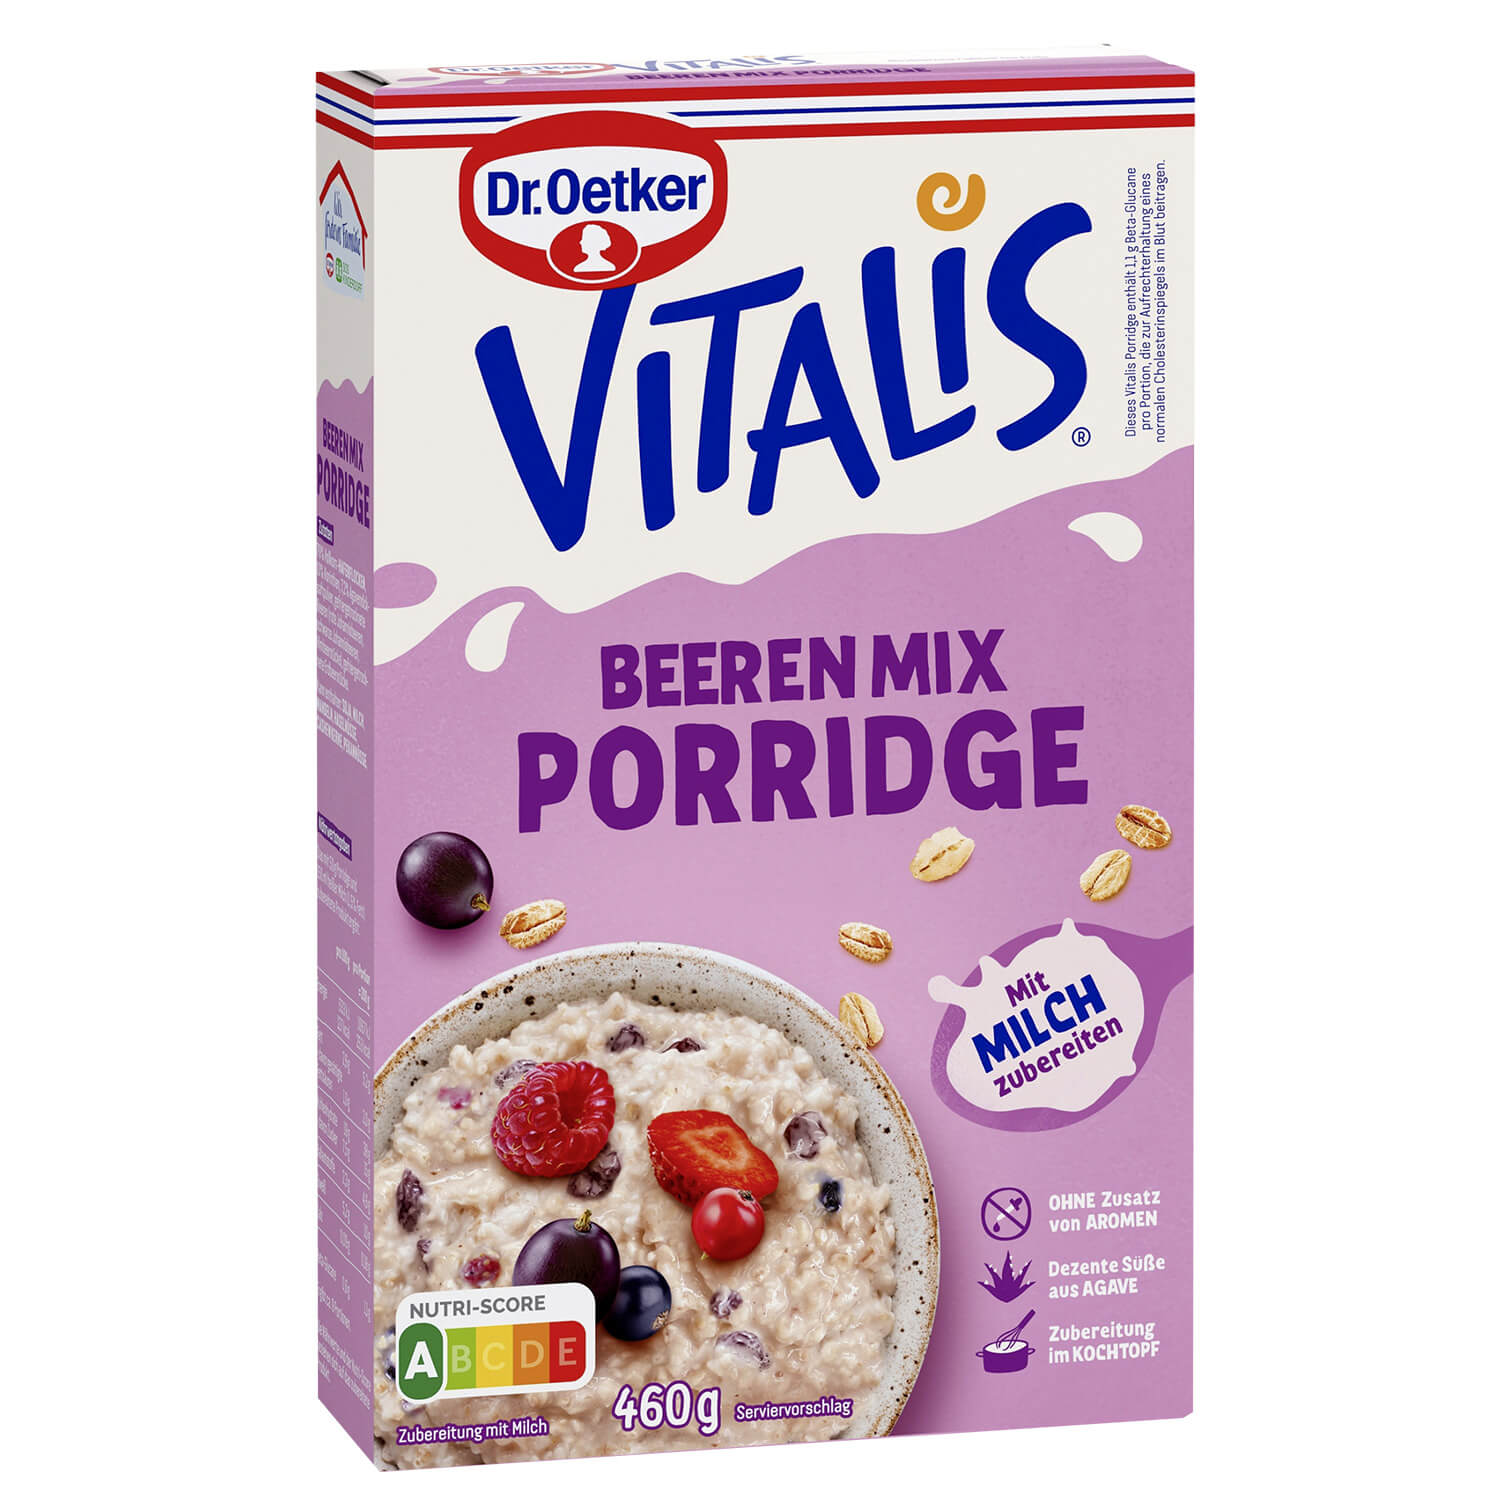 Dr. Oetker Vitalis Porridge Beeren Mix 460g Packung